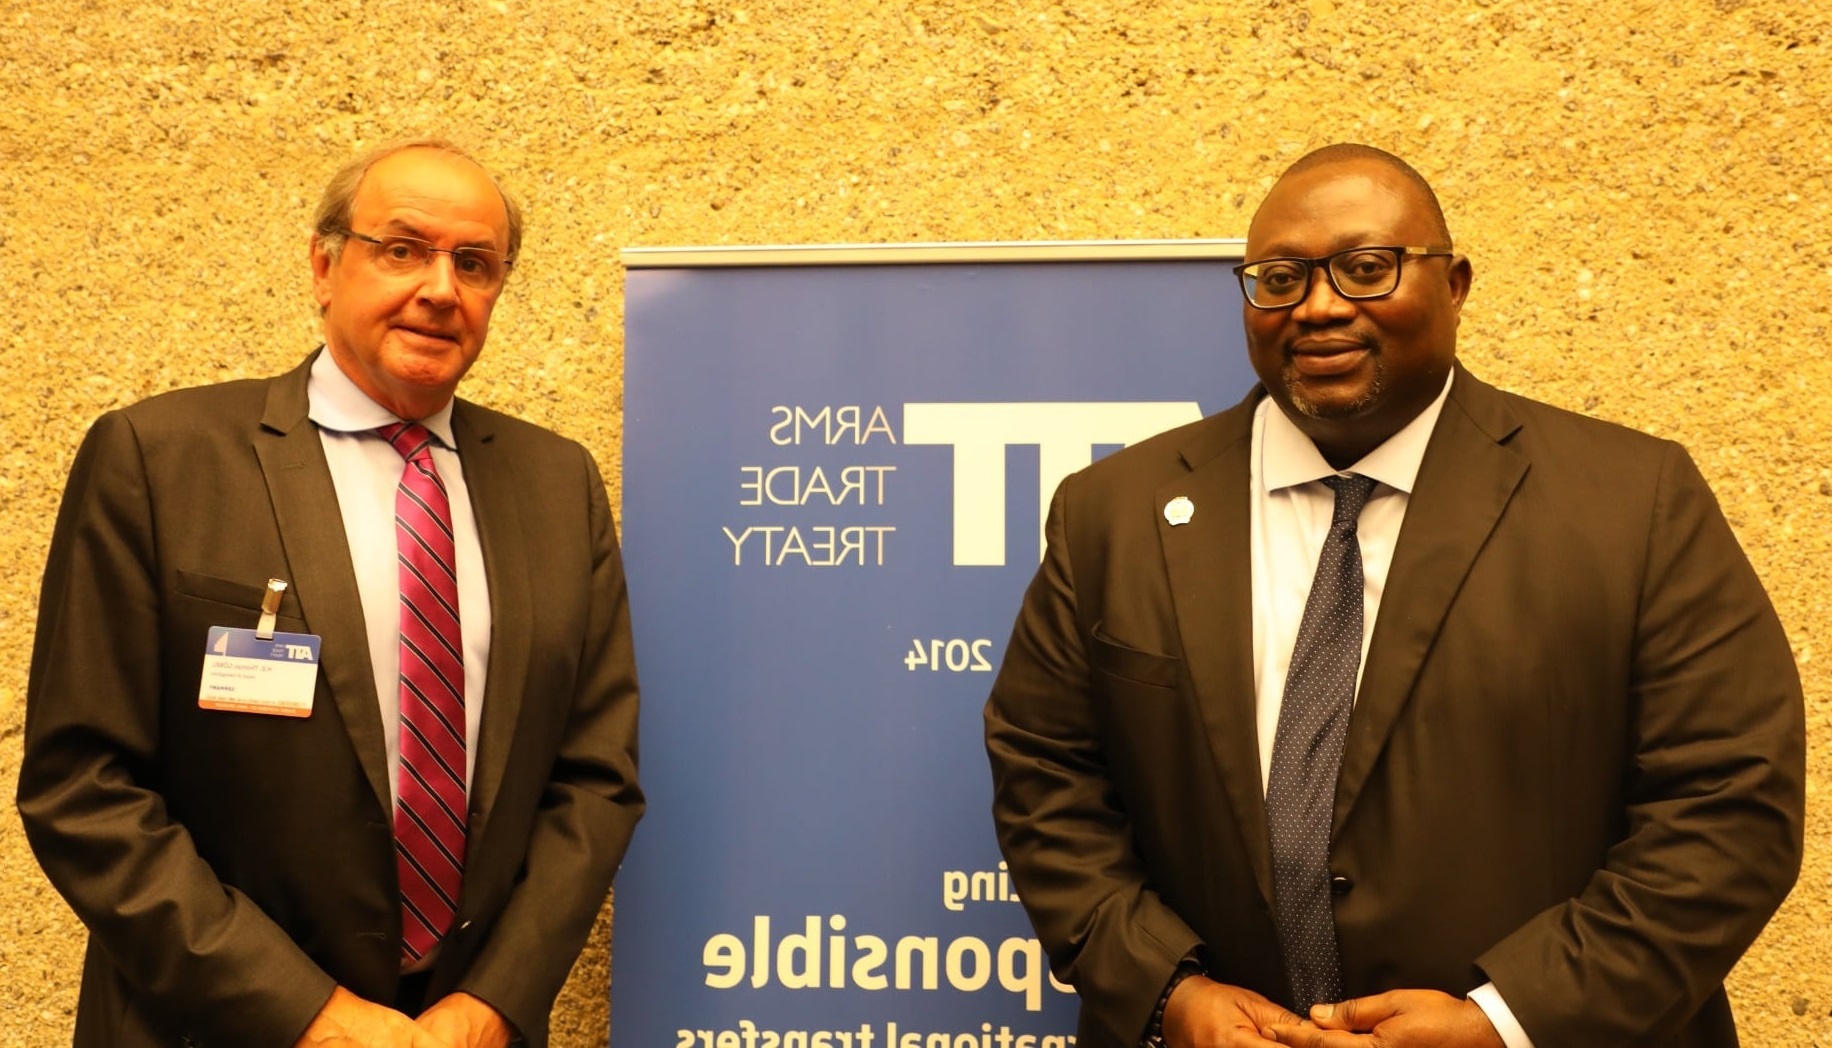 Sierra Leone’s Presidency of Arms Trade Treaty Ends With Major Achievements